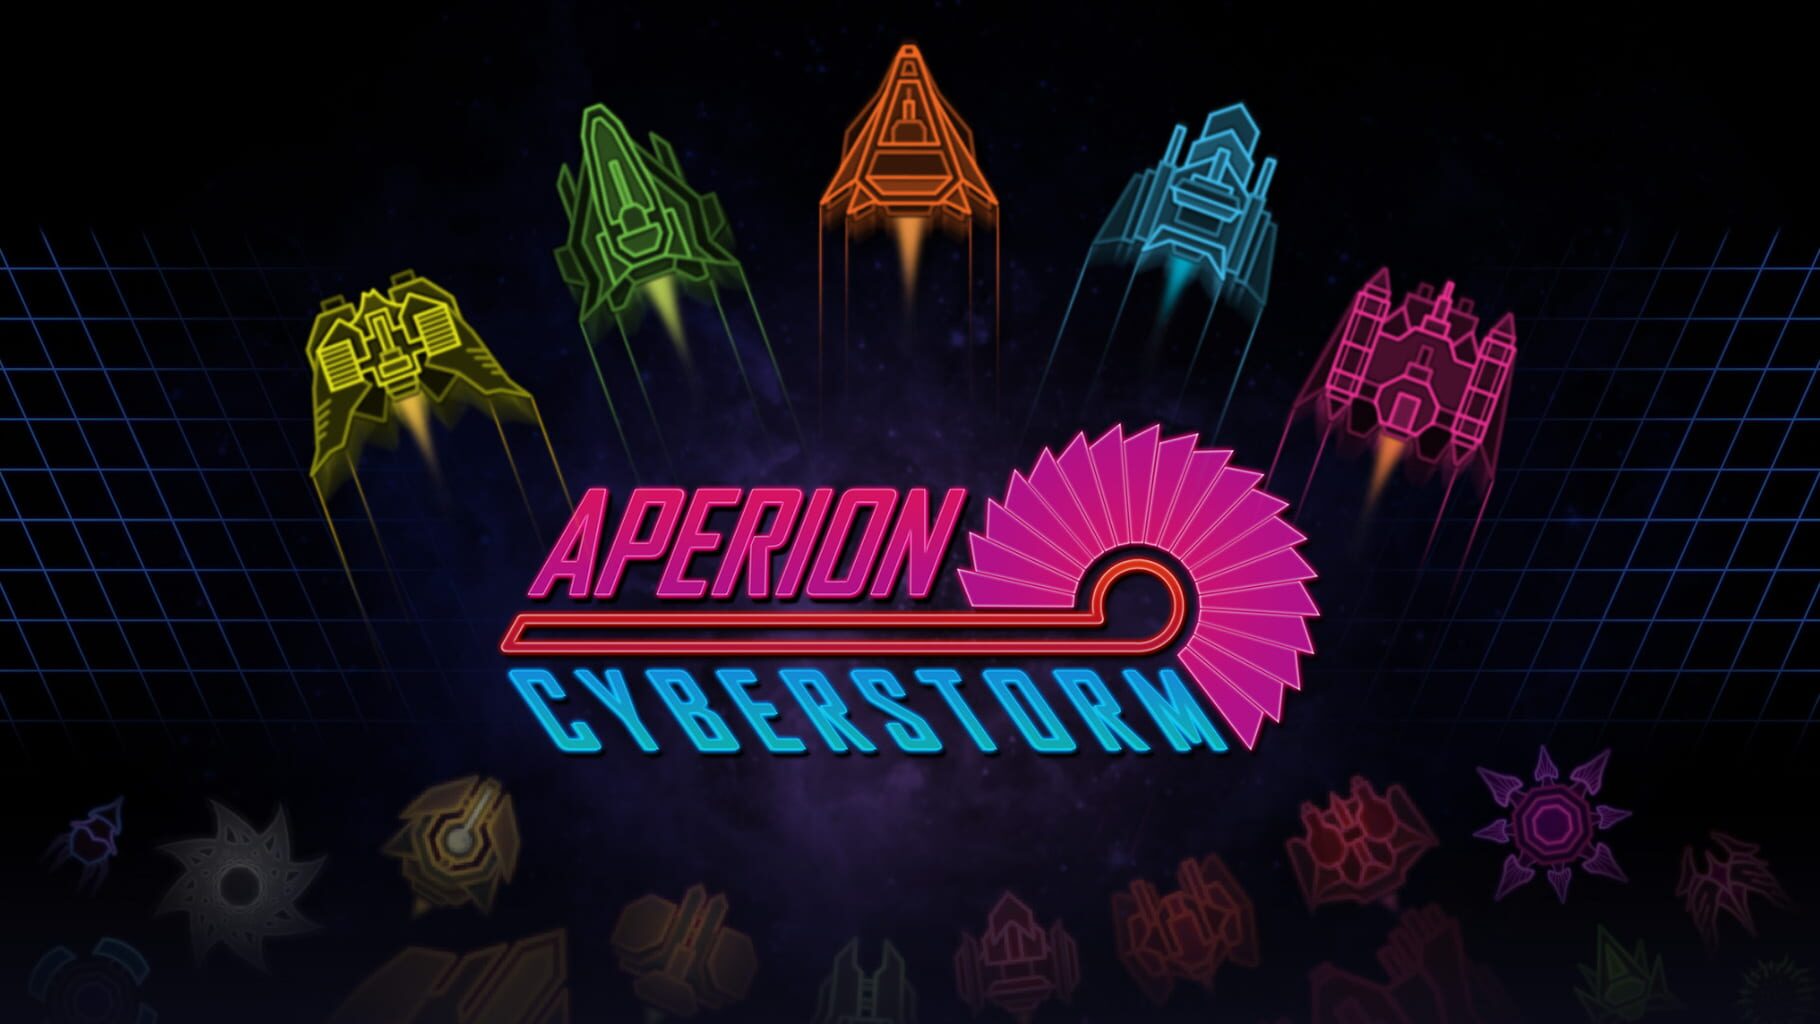 Aperion Cyberstorm artwork